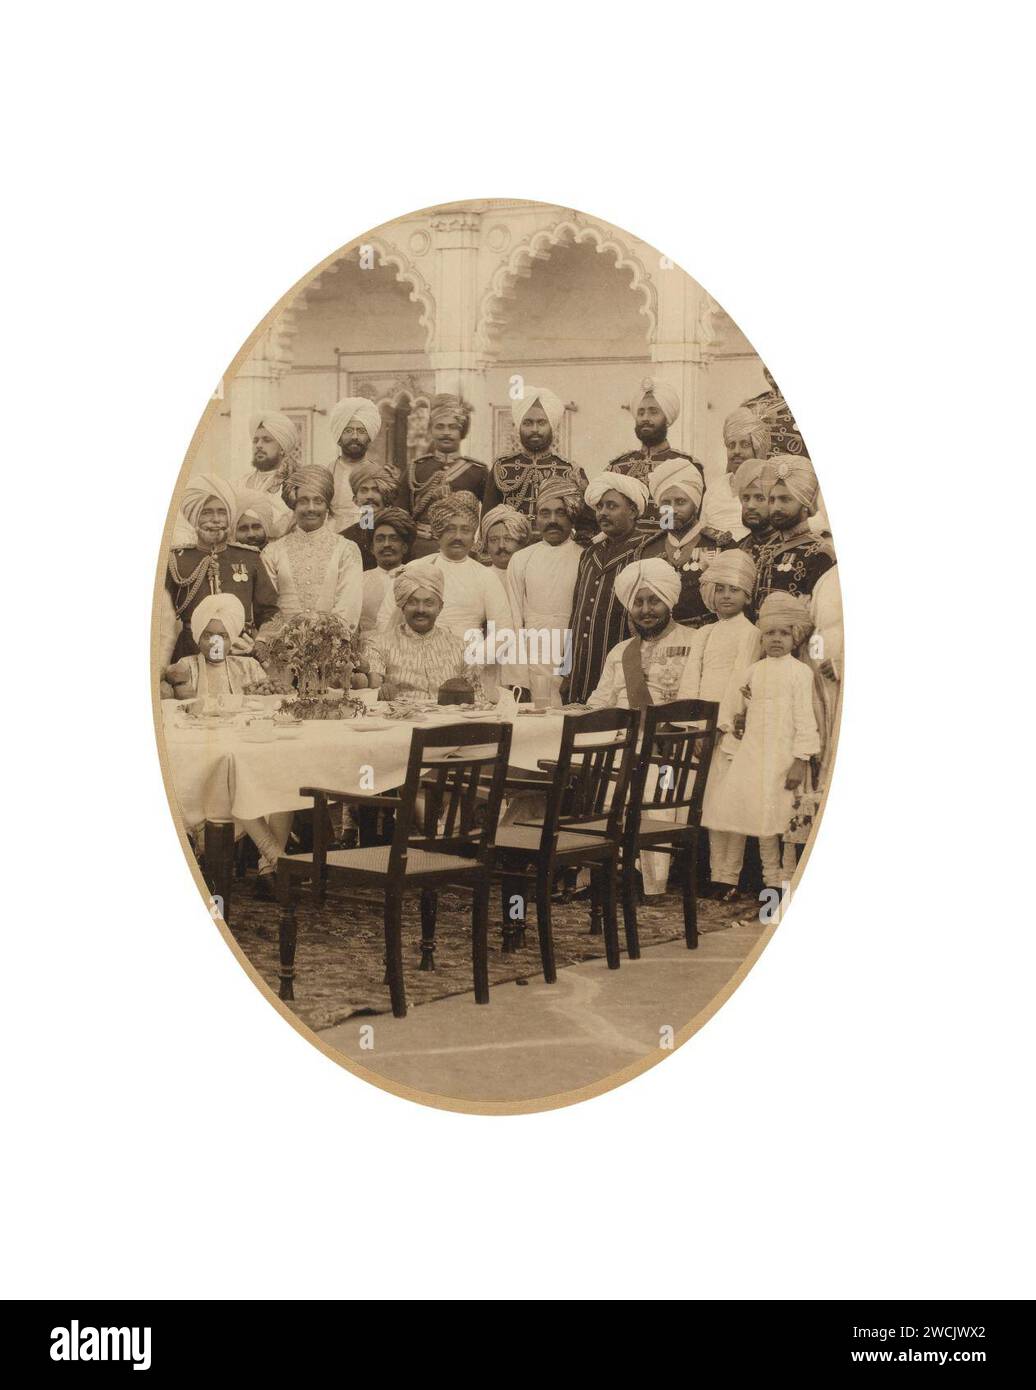 A group photograph of Bhupinder Singh, the Maharaja of Patiala (reg. 1900-1938) with the cricketer Sir Ranjitsinhji Vibhaji Jadeja, known as Ranji, and other guests and servants. Patiala, circa 1910. Stock Photo